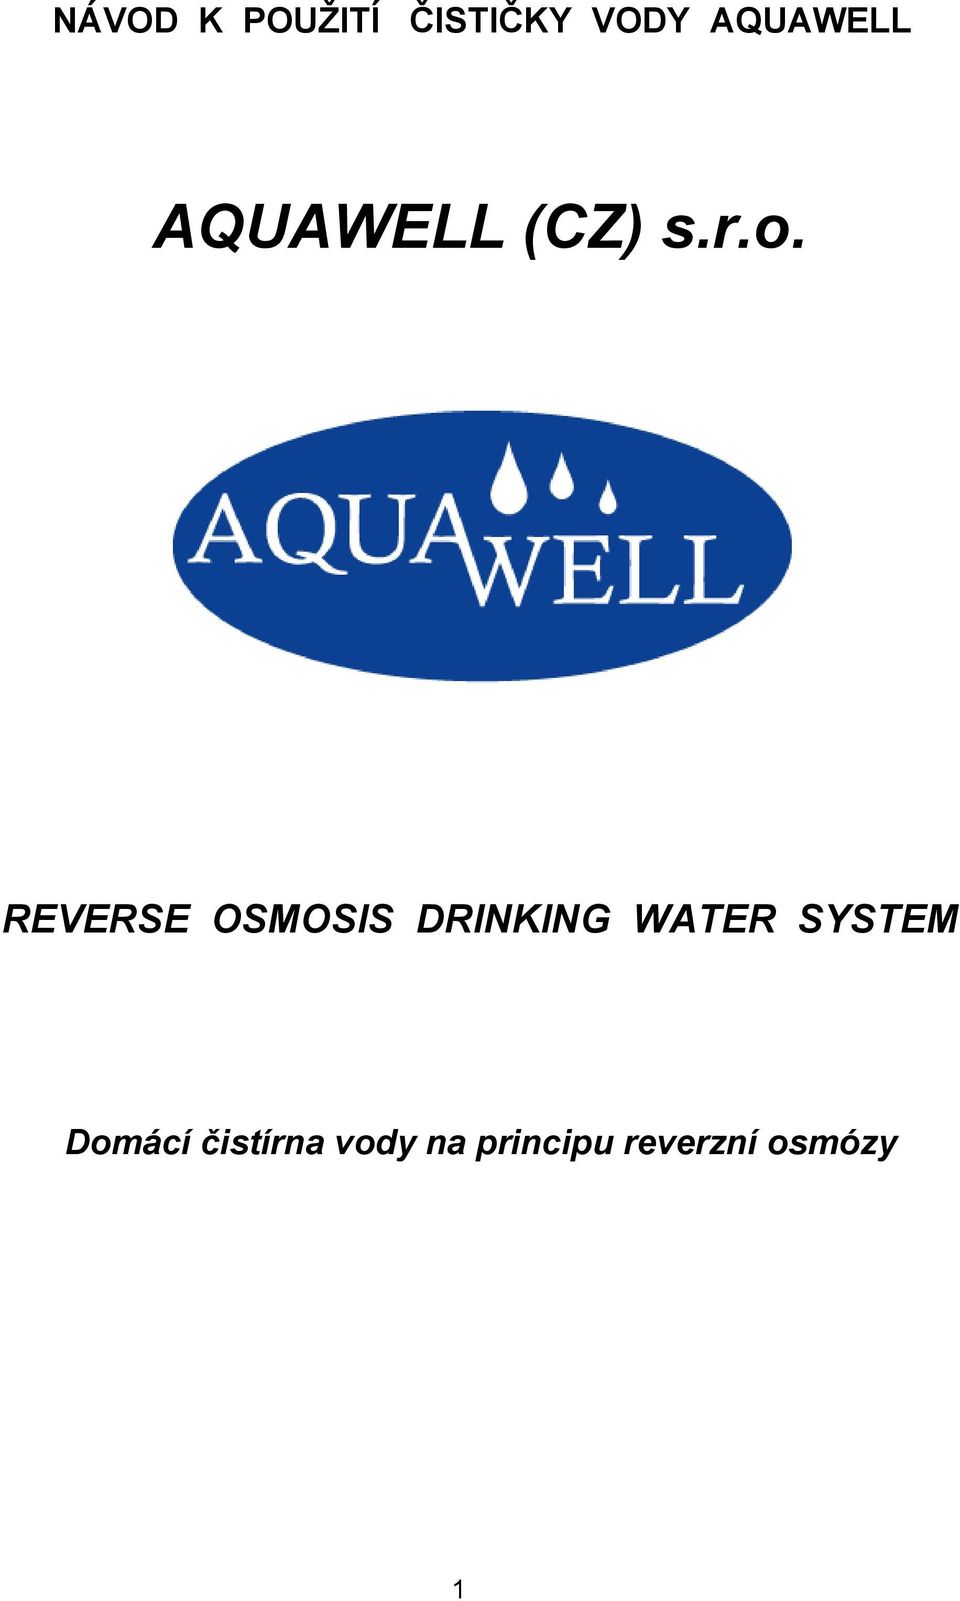 REVERSE OSMOSIS DRINKING WATER